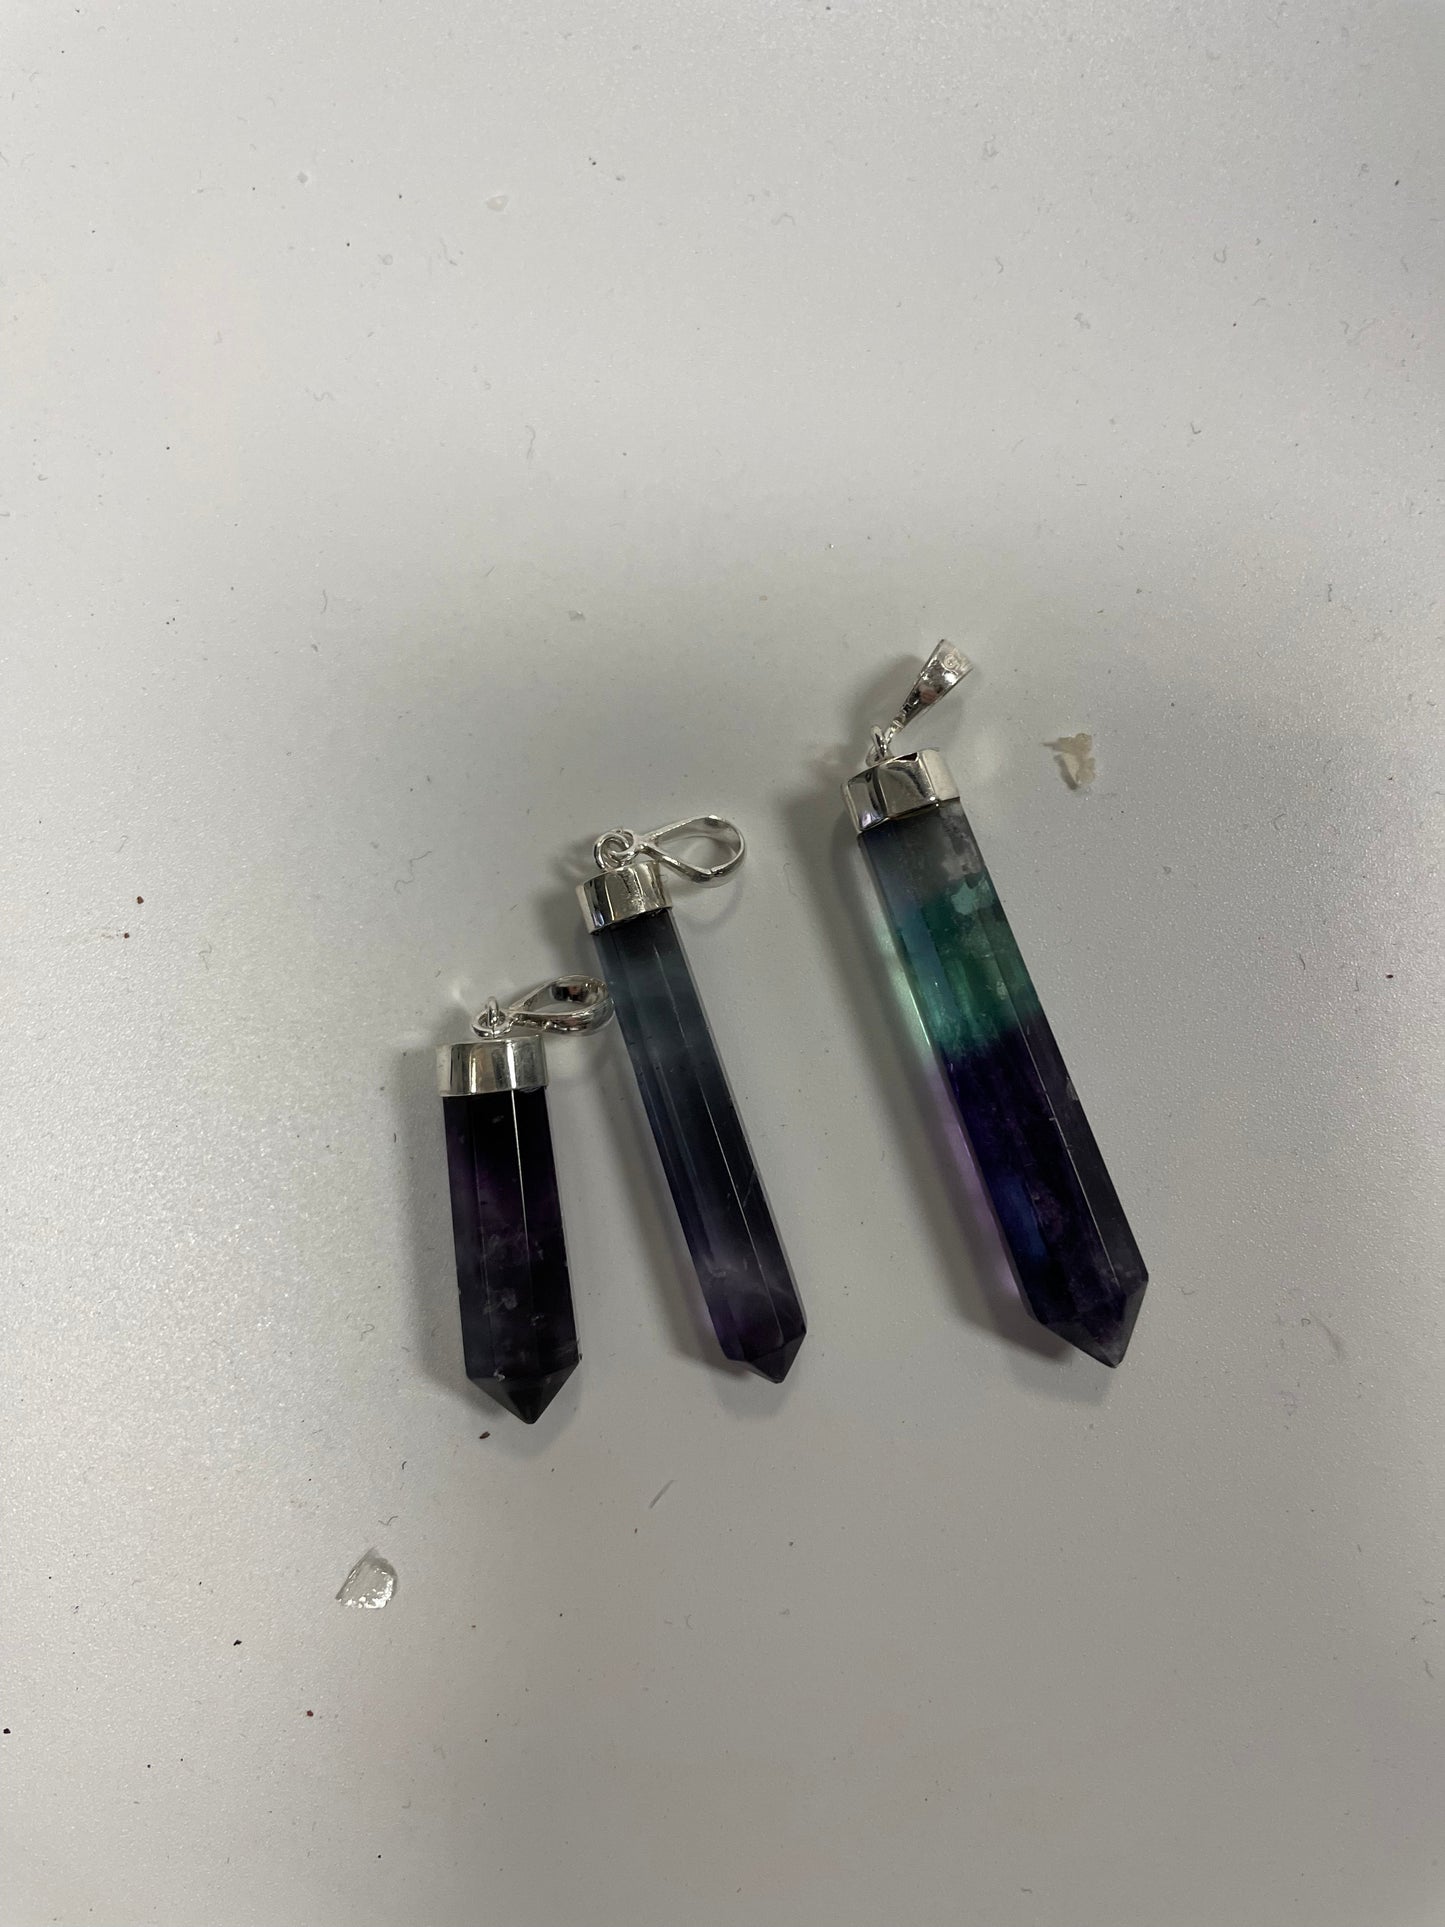 Fluorite Necklace, Gemstone Necklace, Rainbow Fluorite Stones Crystal Shop